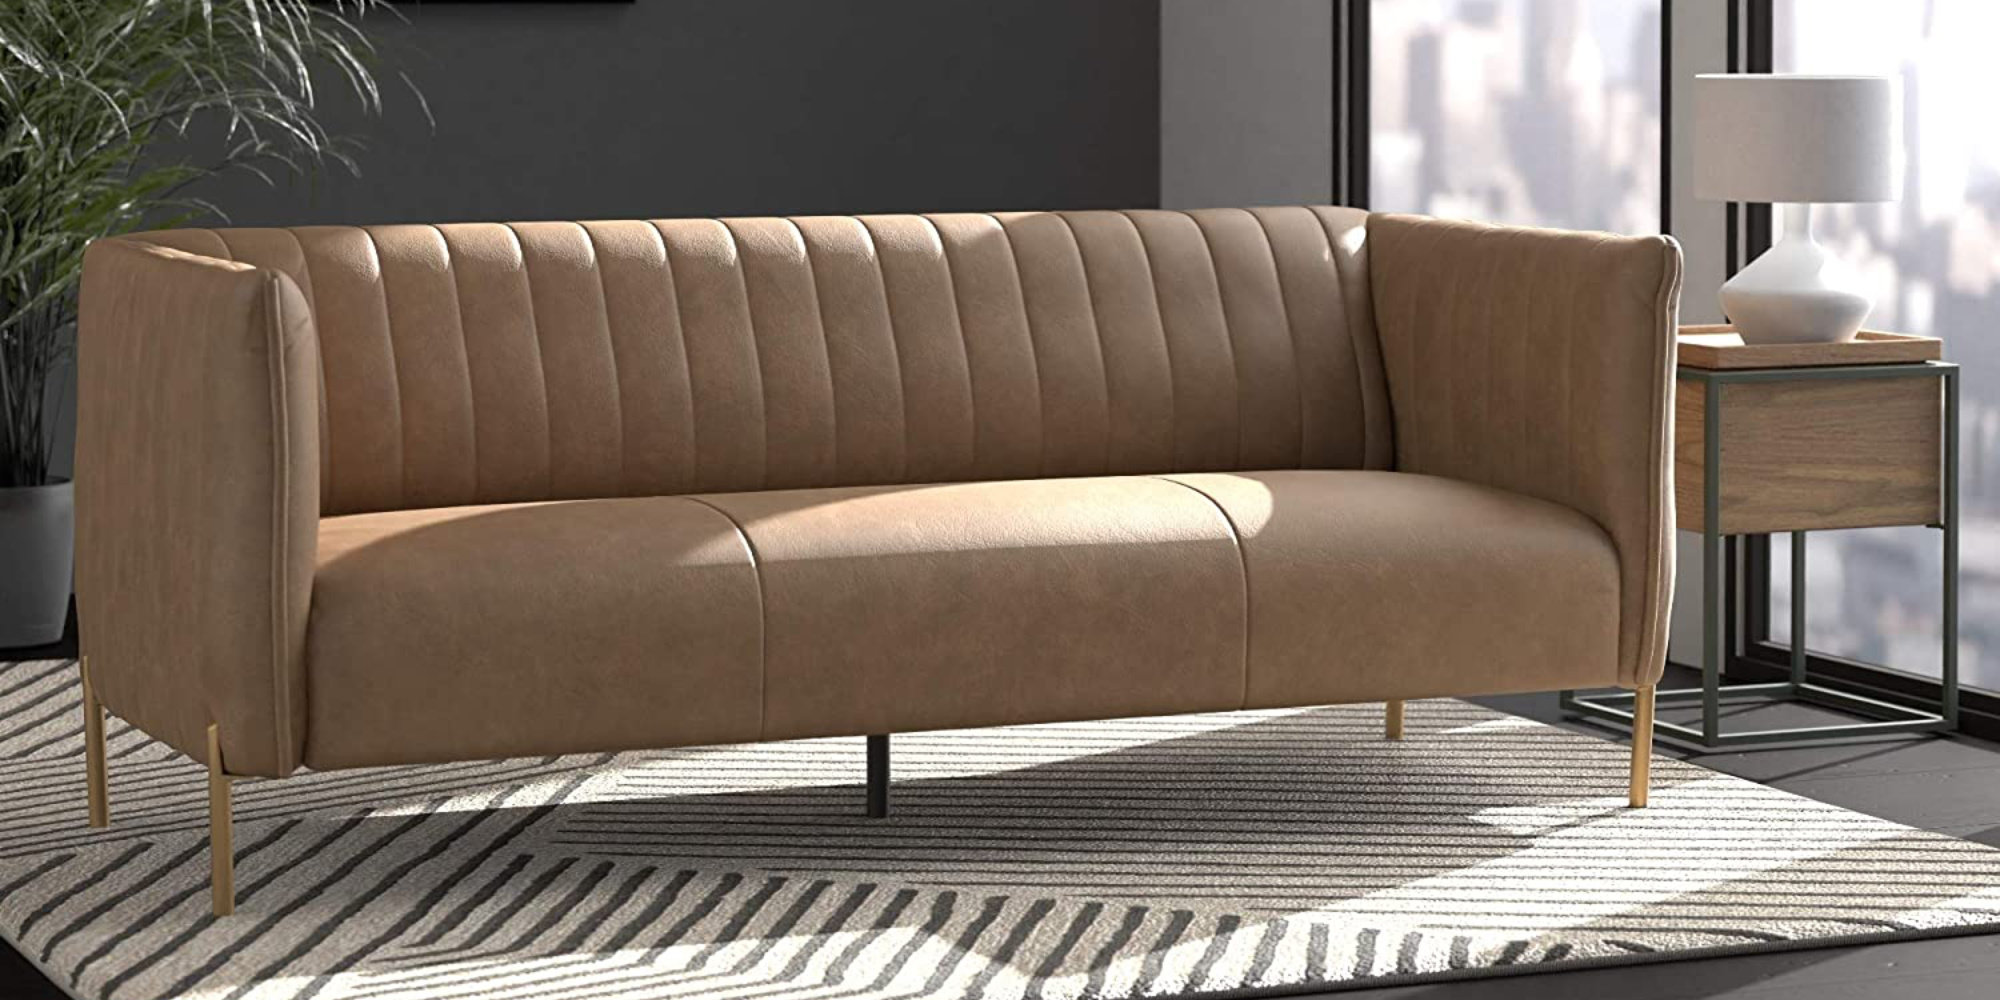 amazon leather sofa tan